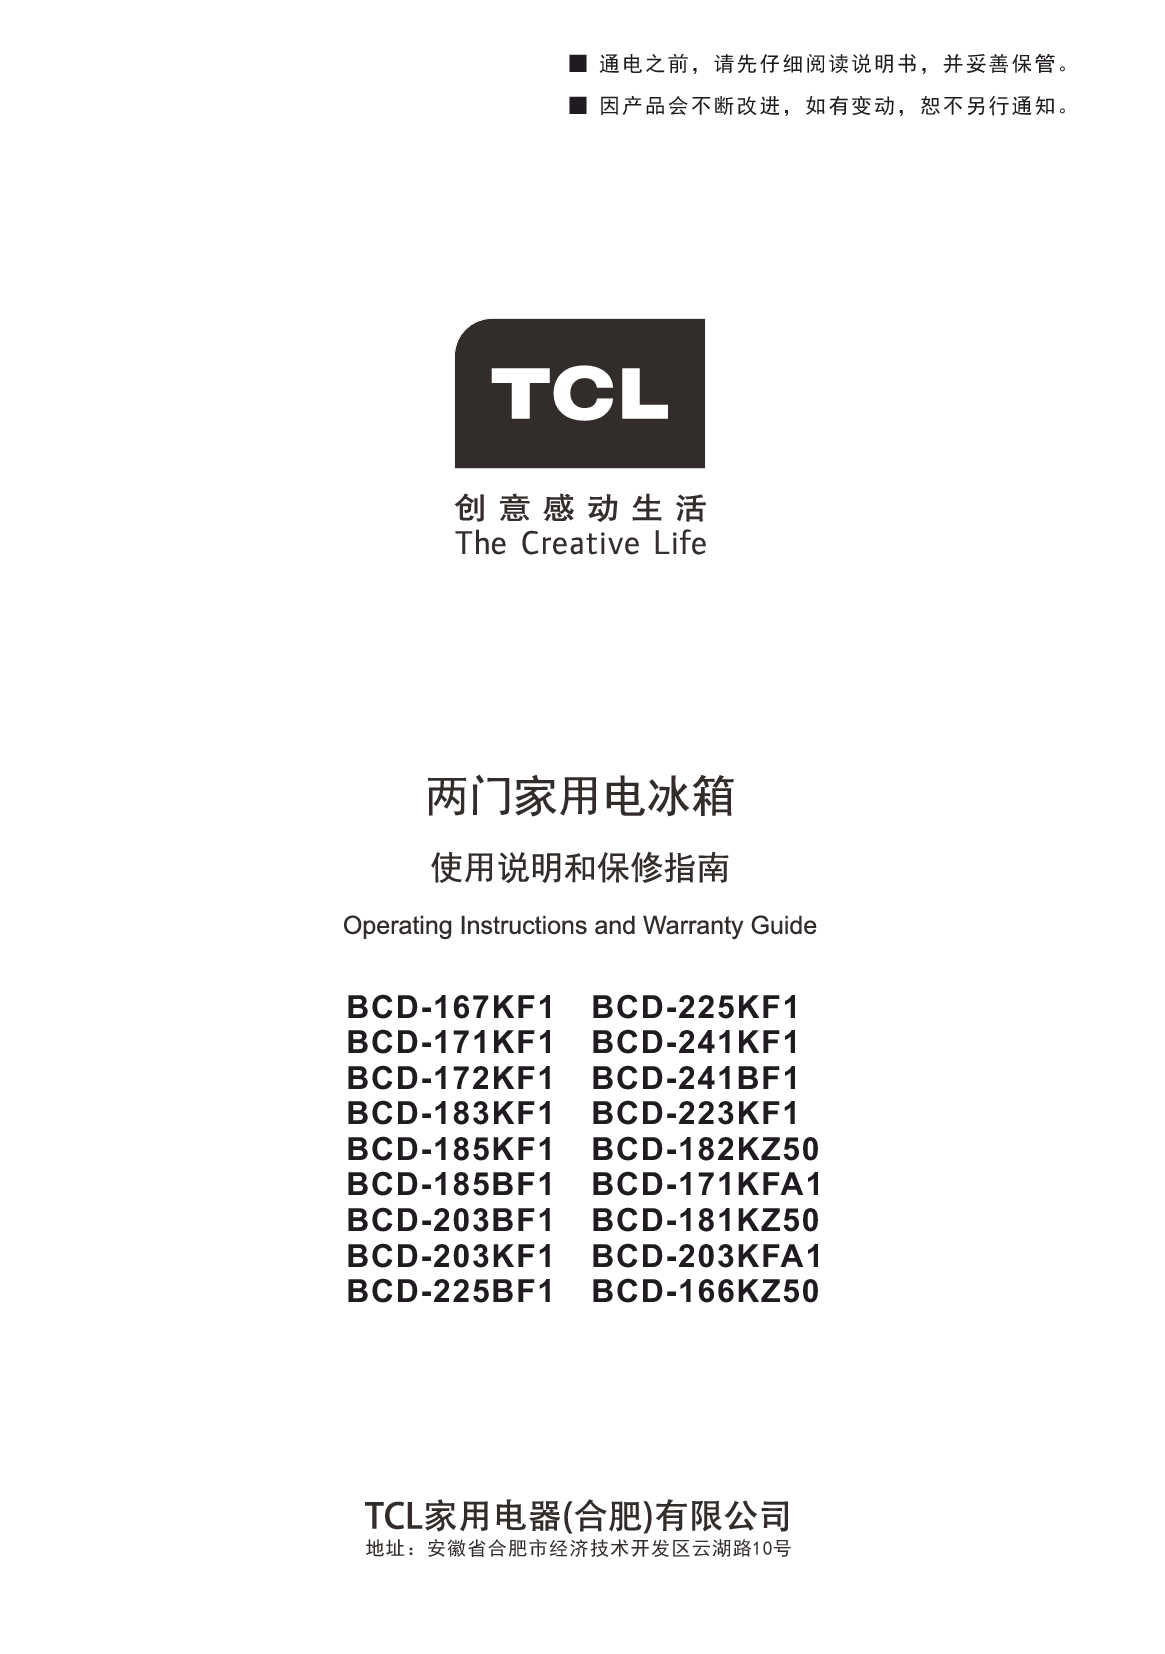 TCL BCD-166KZ50, BCD-171KF1, BCD-203BF1 使用说明书 封面